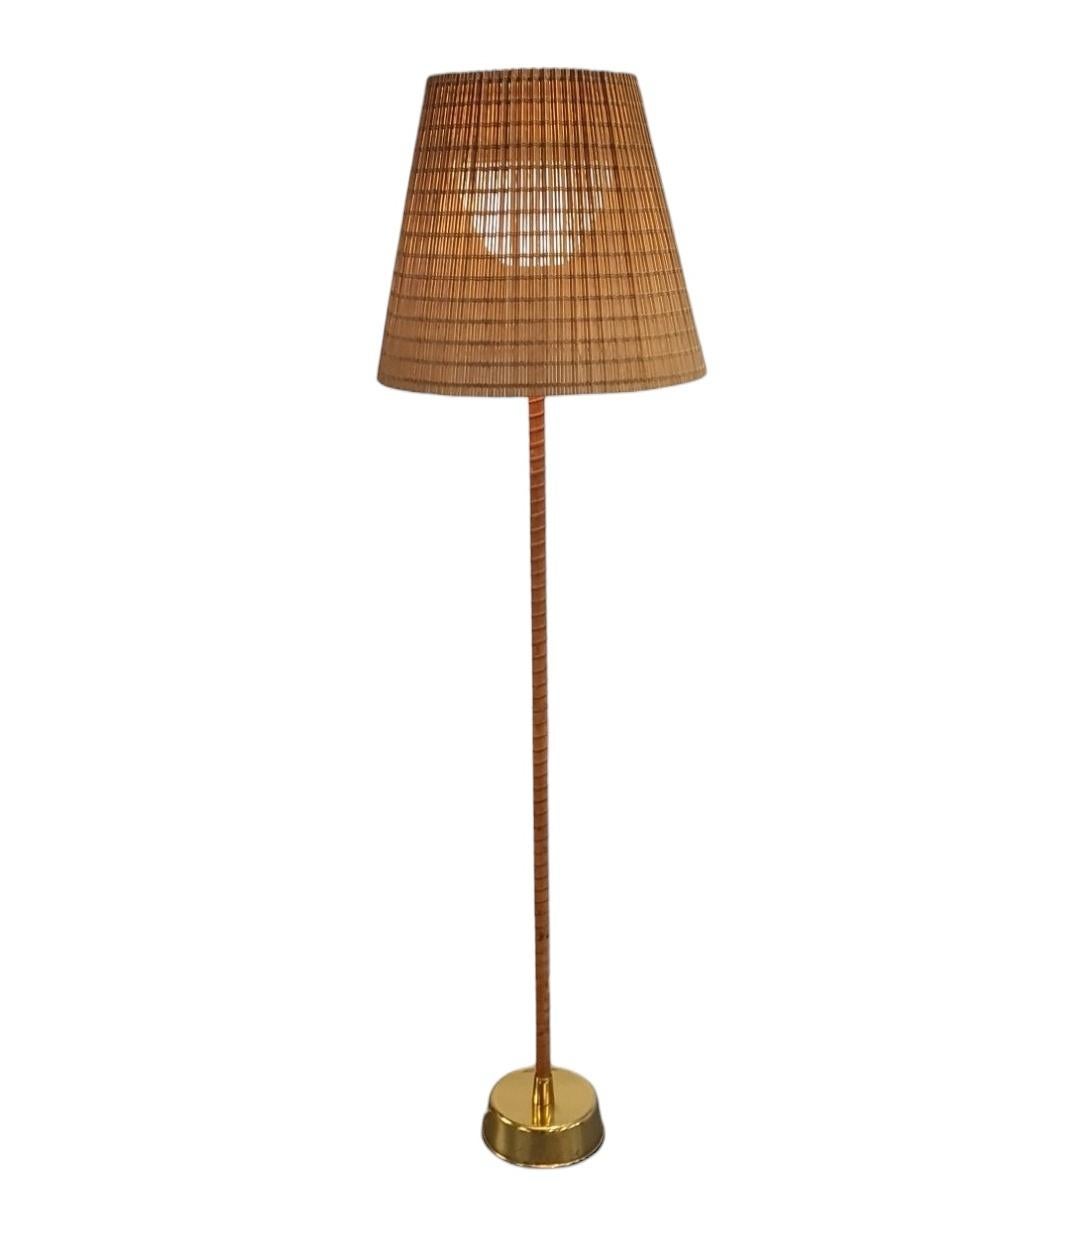 Scandinavian Modern Lisa Johansson-Papé Ihanne Floor Lamp, Orno for Stockmann 1960s For Sale